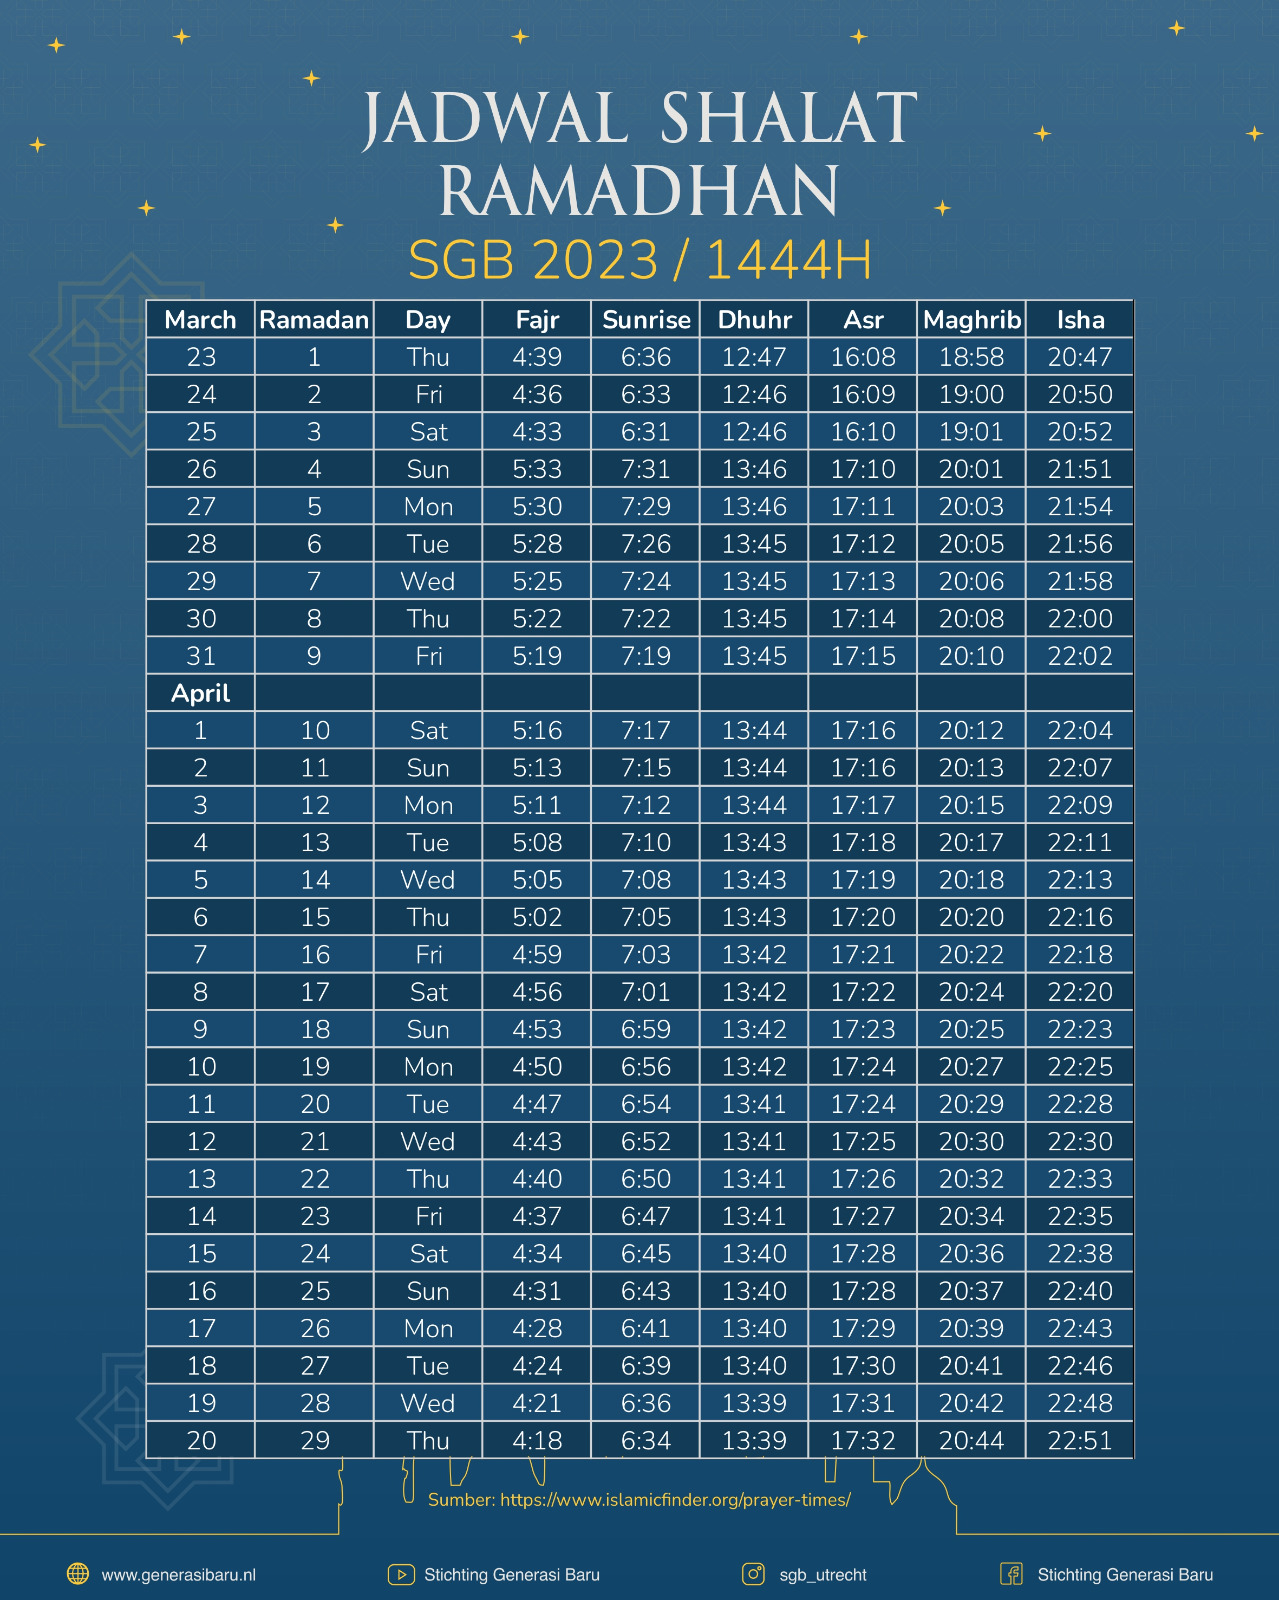 Jadwal Shalat Ramadhan 2023 / 1444H